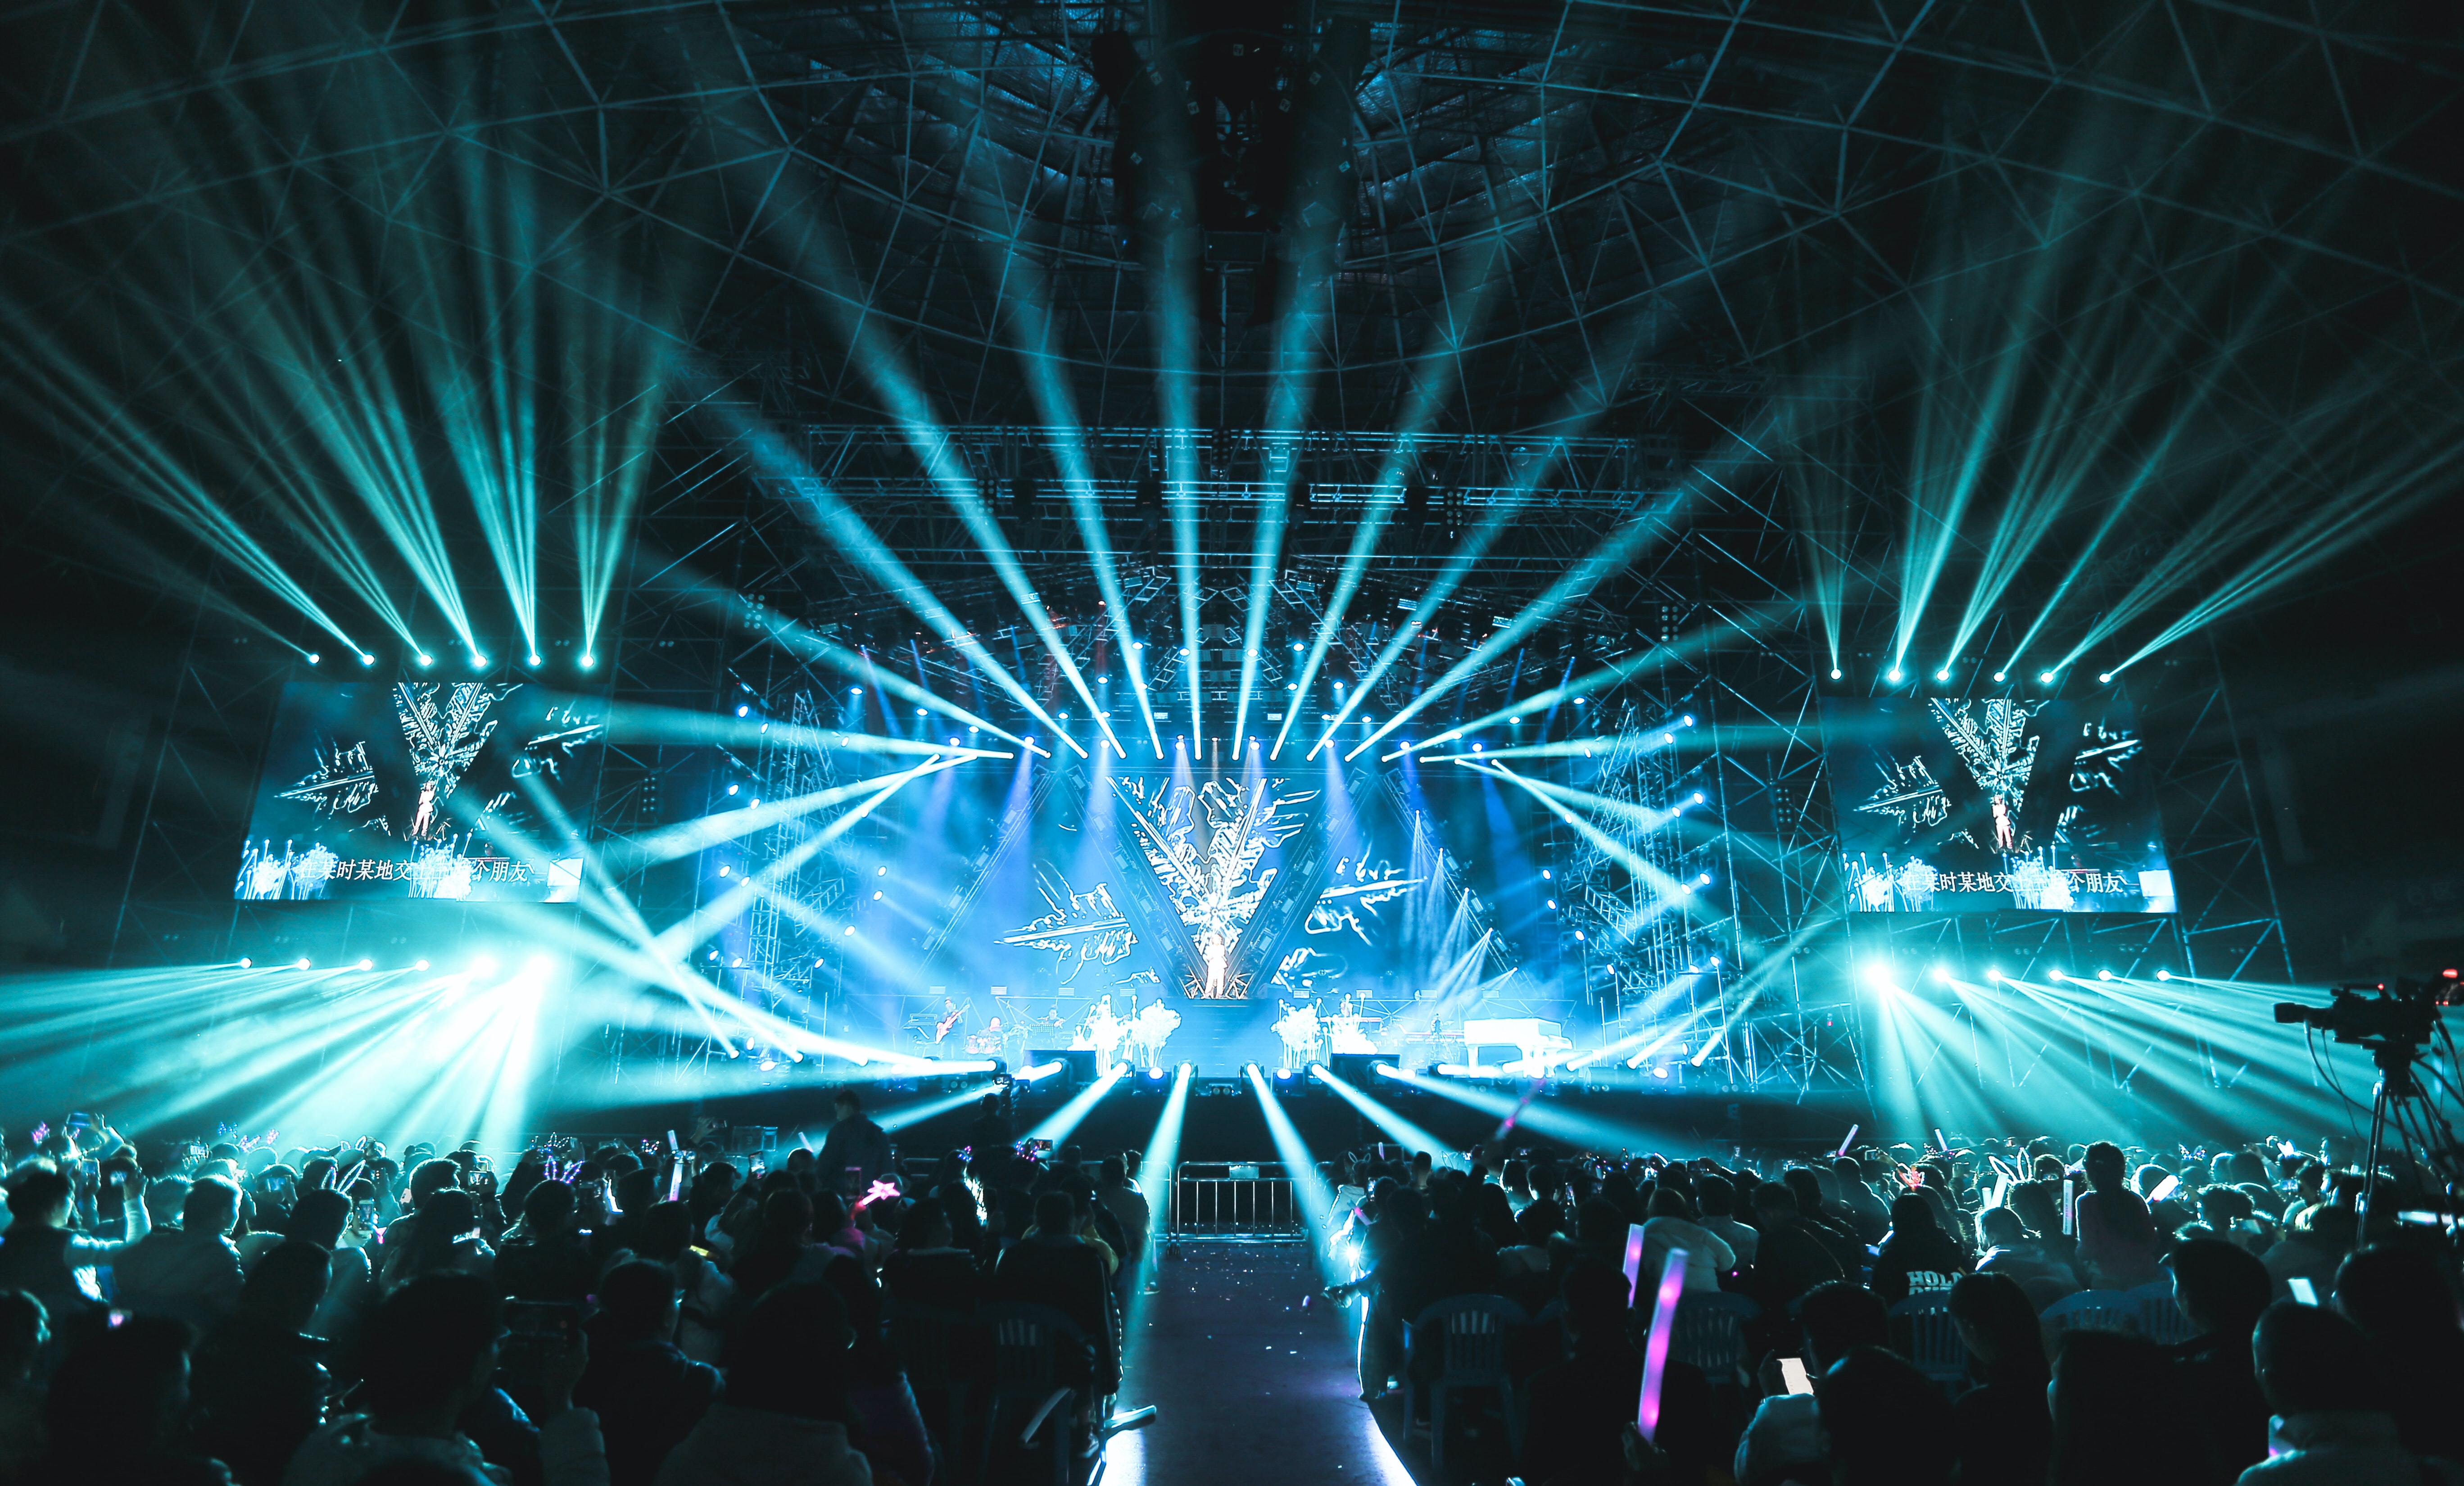 Best Stage Lights Photo · 100% Free Downloads